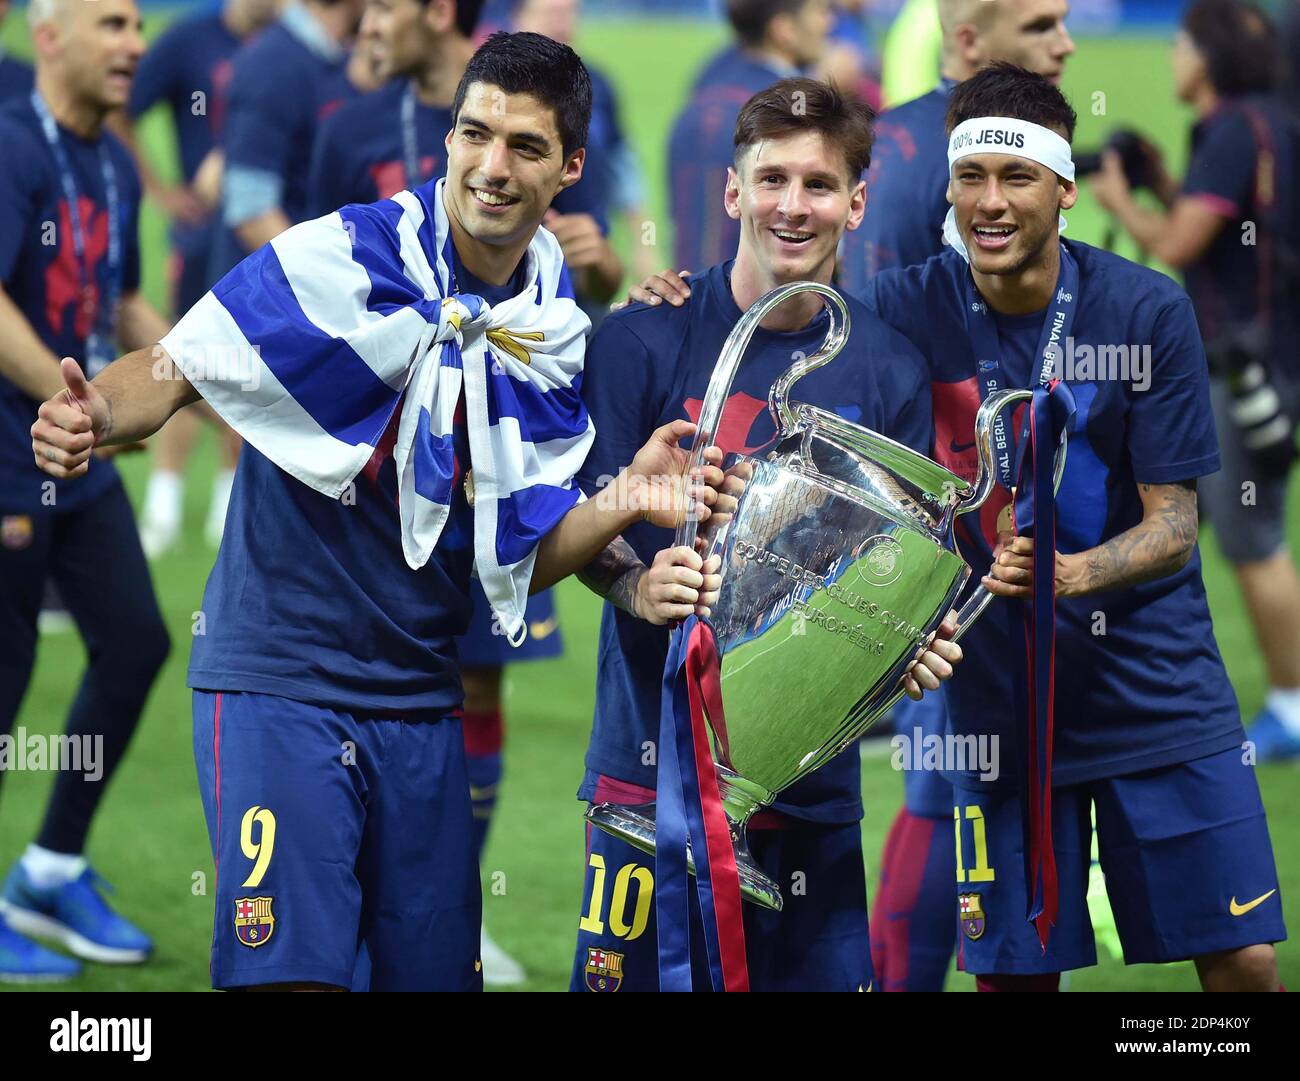 Barça Art on Twitter The Greatest Frontline in the world  wallpaper  Messi suarez neymar msn httpstcoY1Z6hnTRHH httpstcoV8Gg0Uq3zj   Twitter